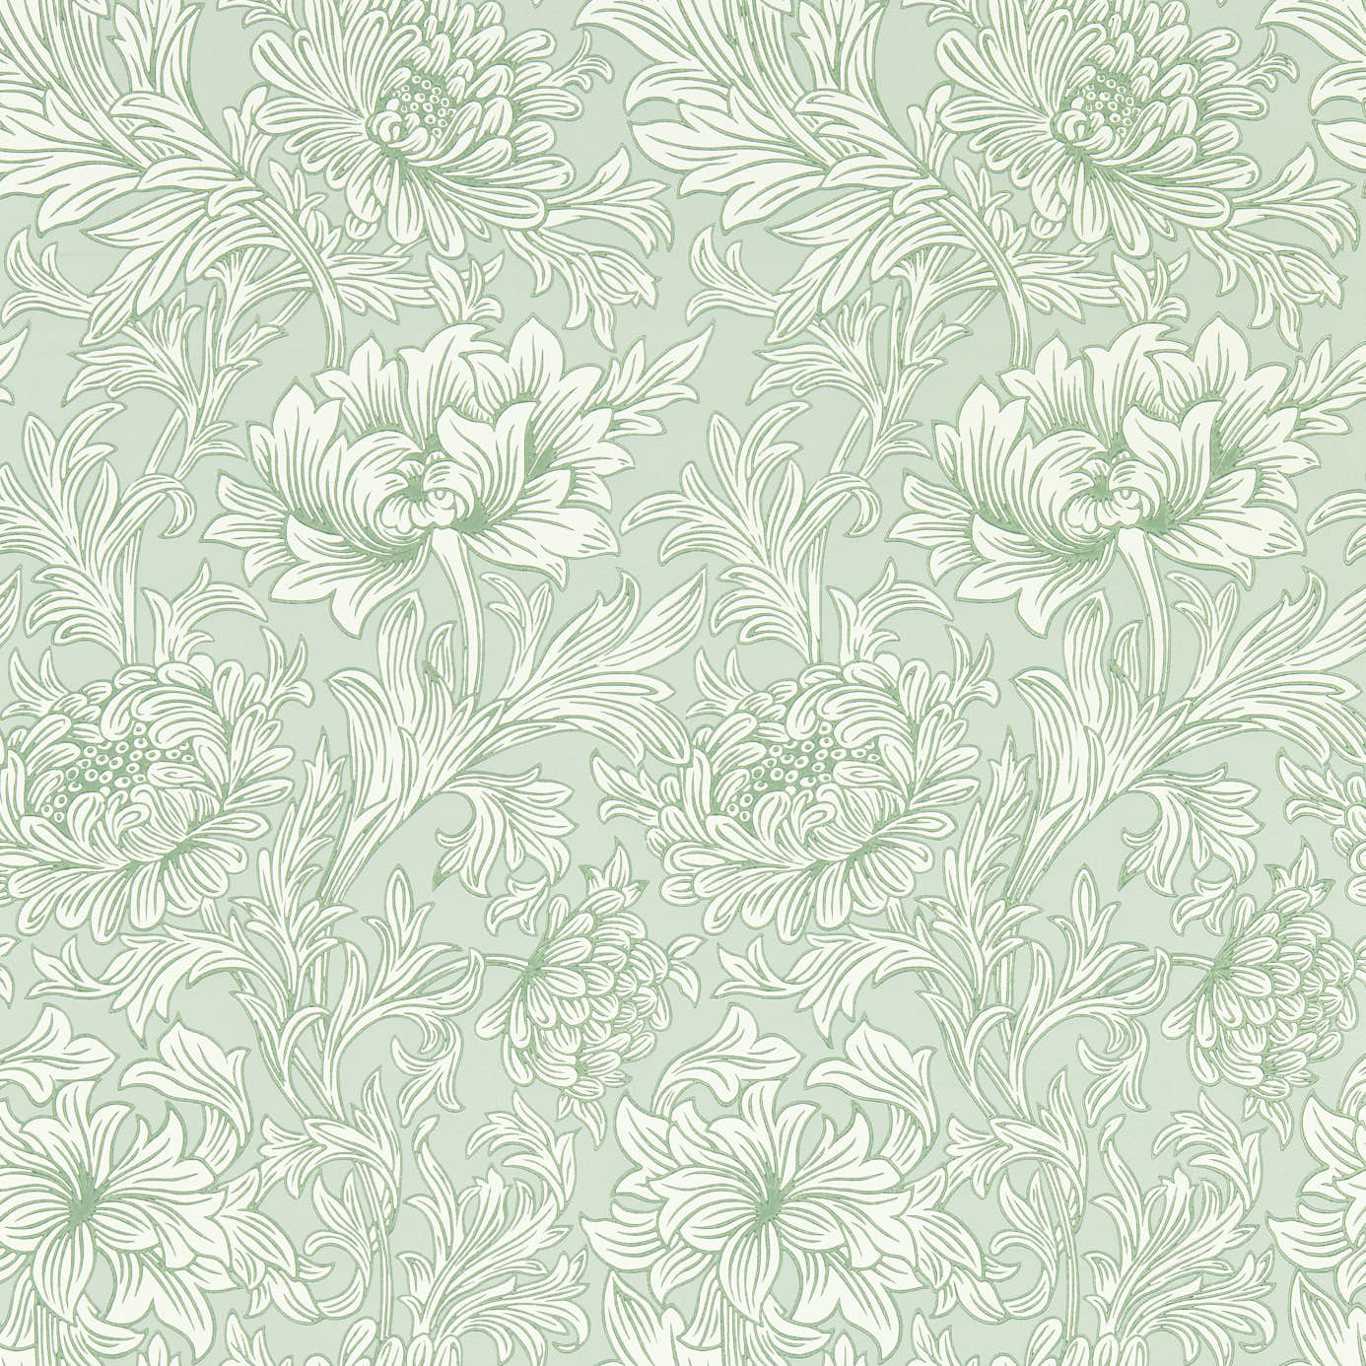 Chrysanthemum Toile Willow Wallpaper MSIM217069 by Morris & Co